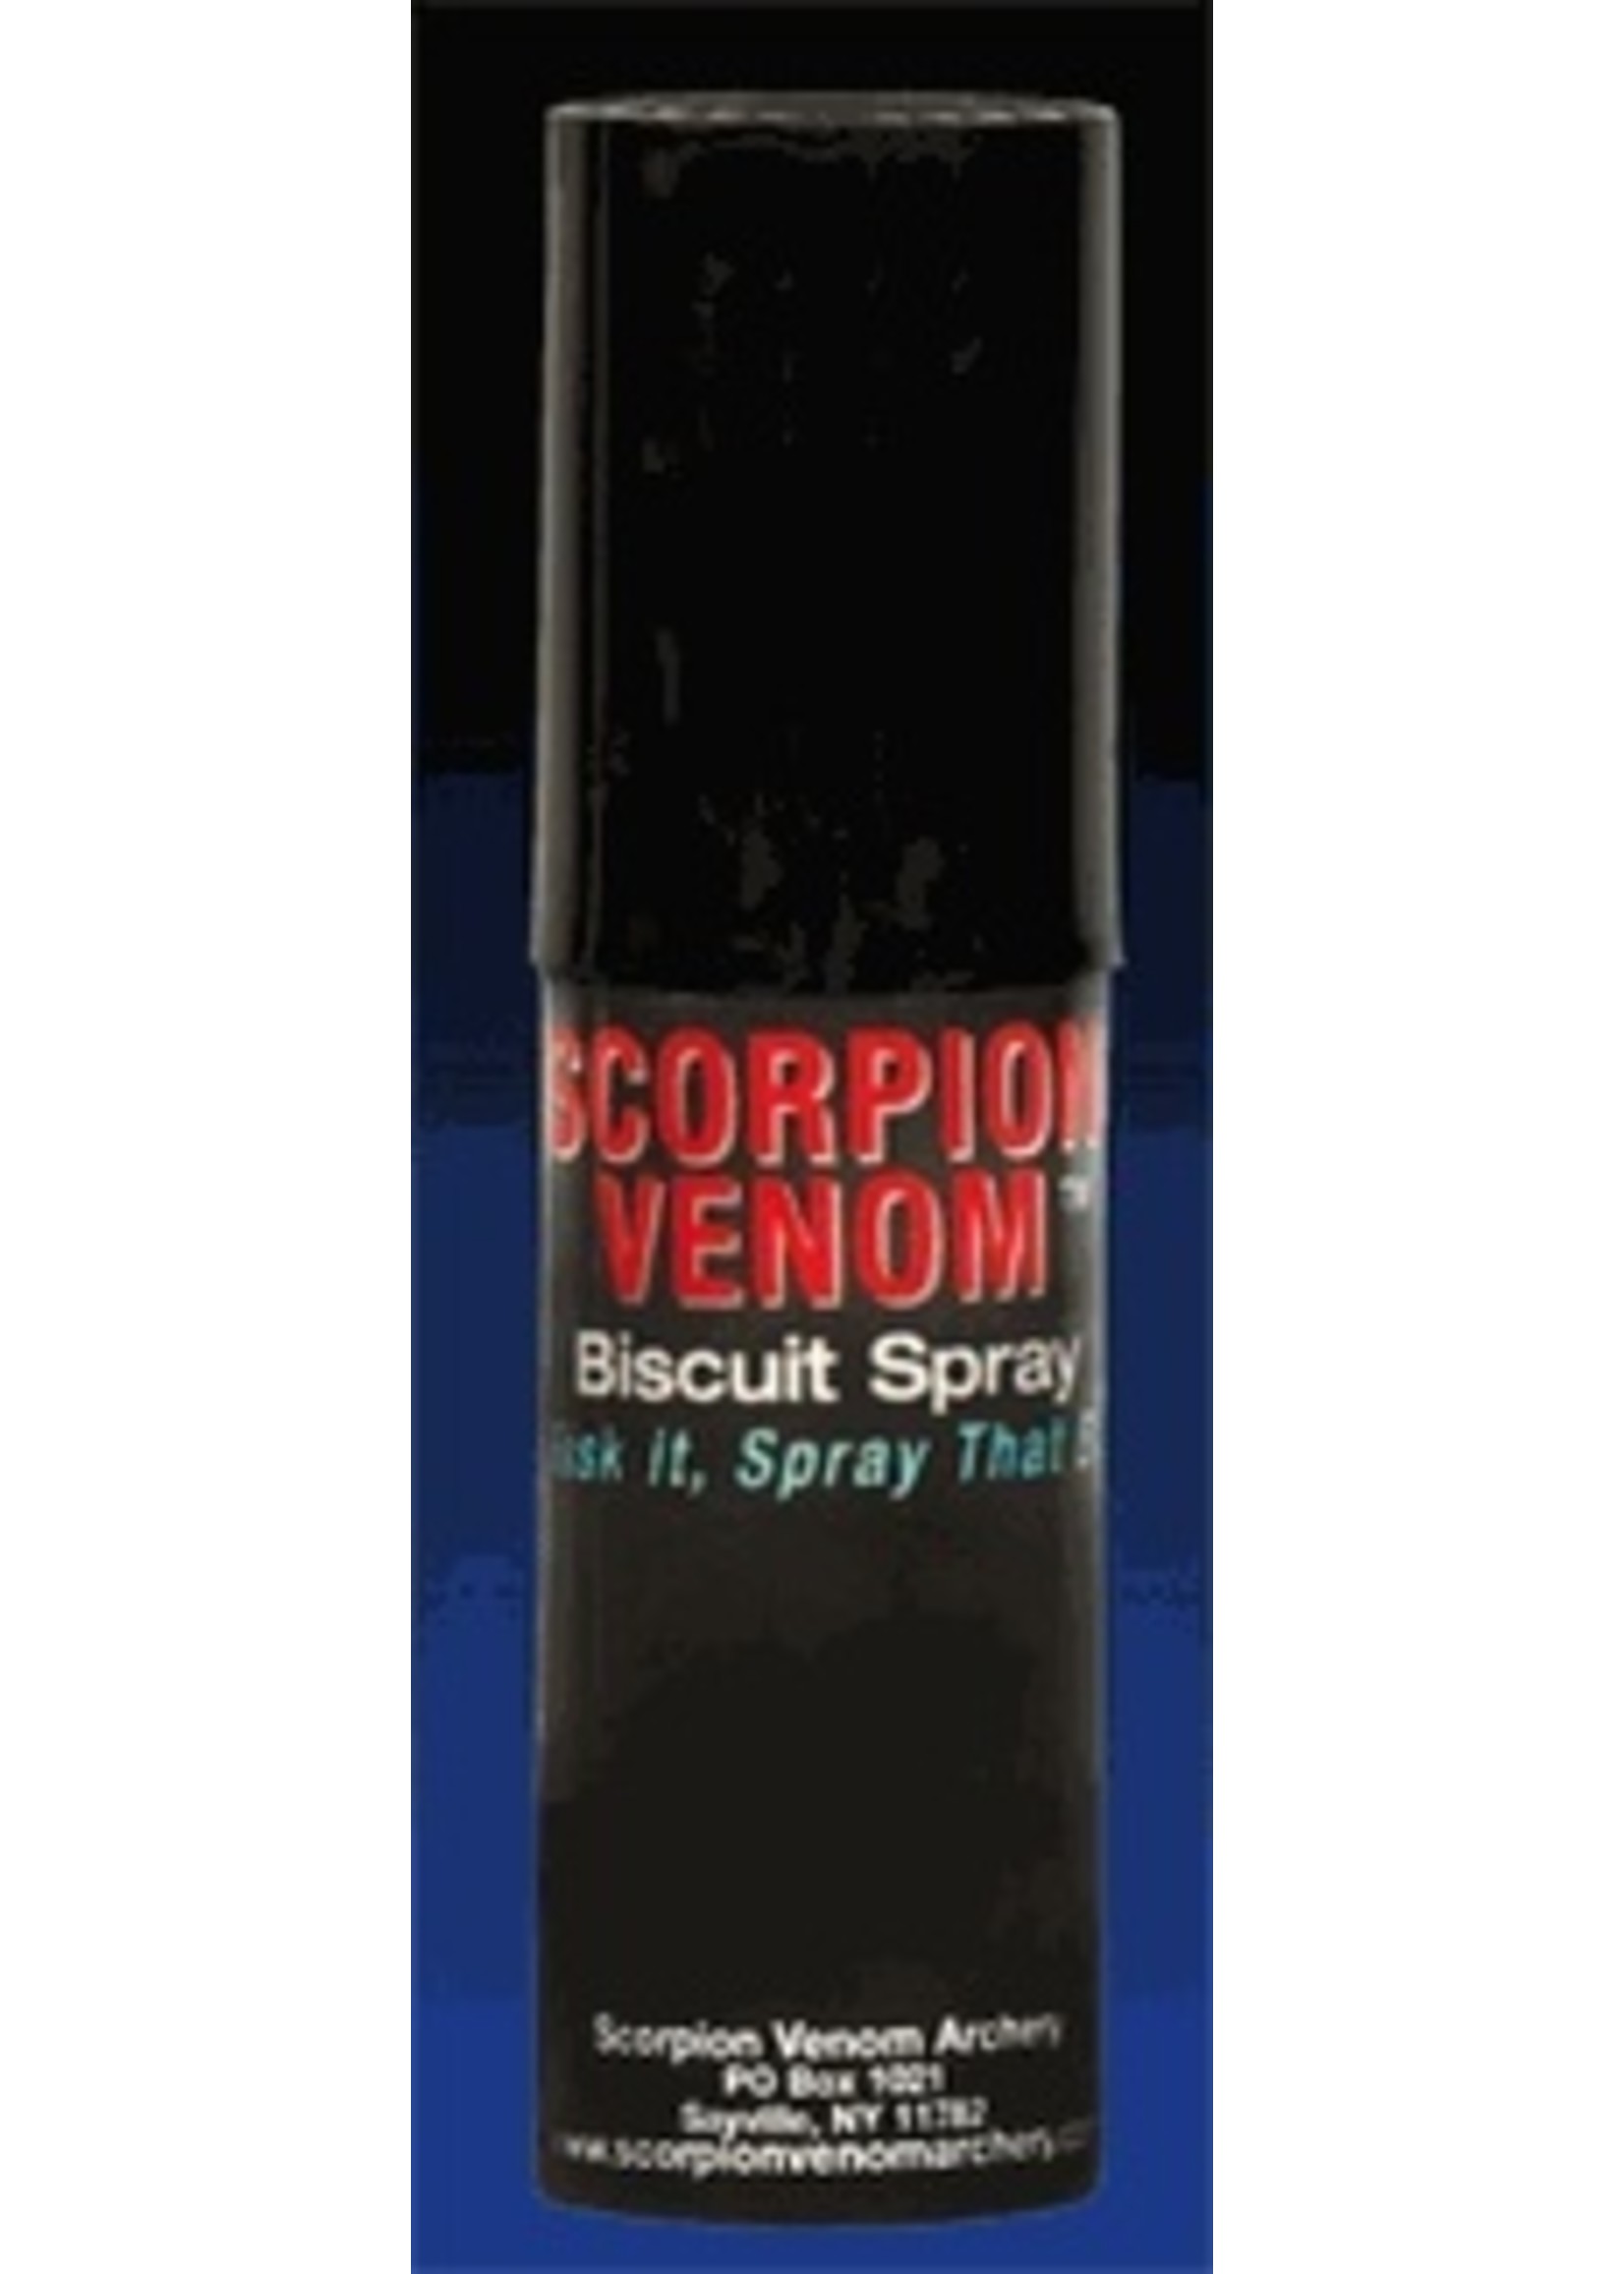 Scorpion Venom Weather Proof Biscuit/Feather Spray